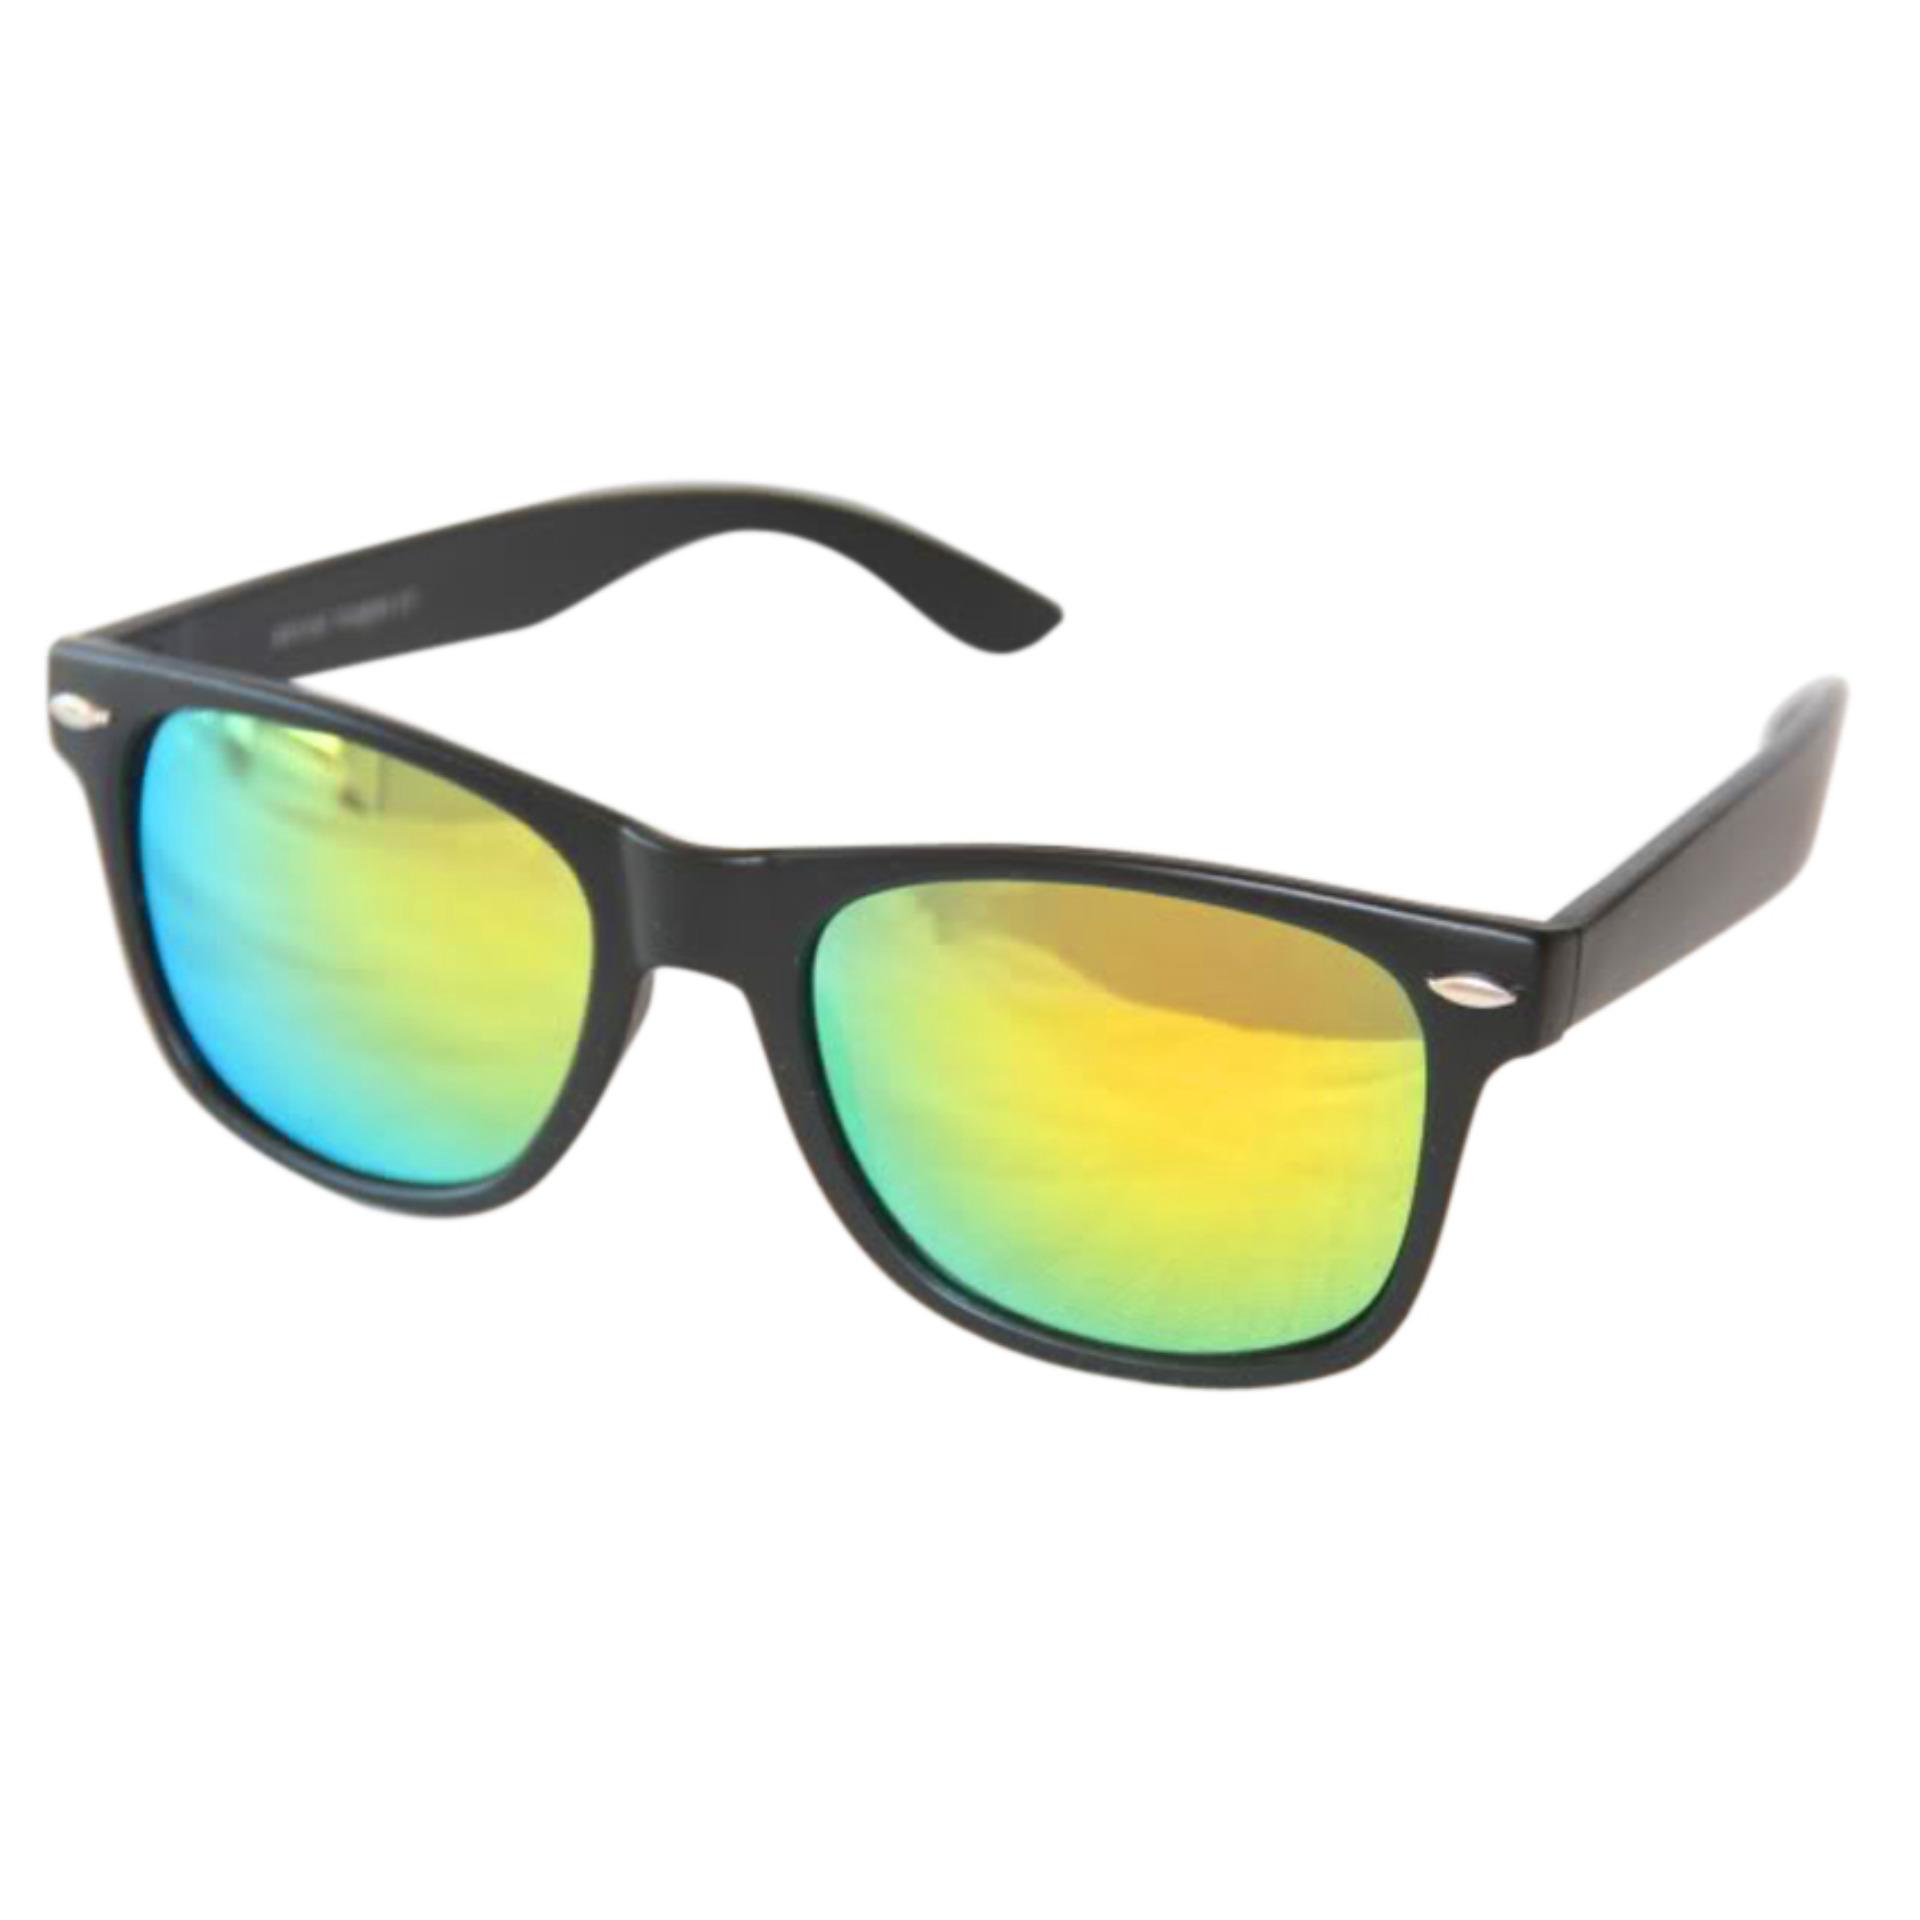 Retro Aviator Sunglasses Eyewear Mirrored Lens Kacamata 